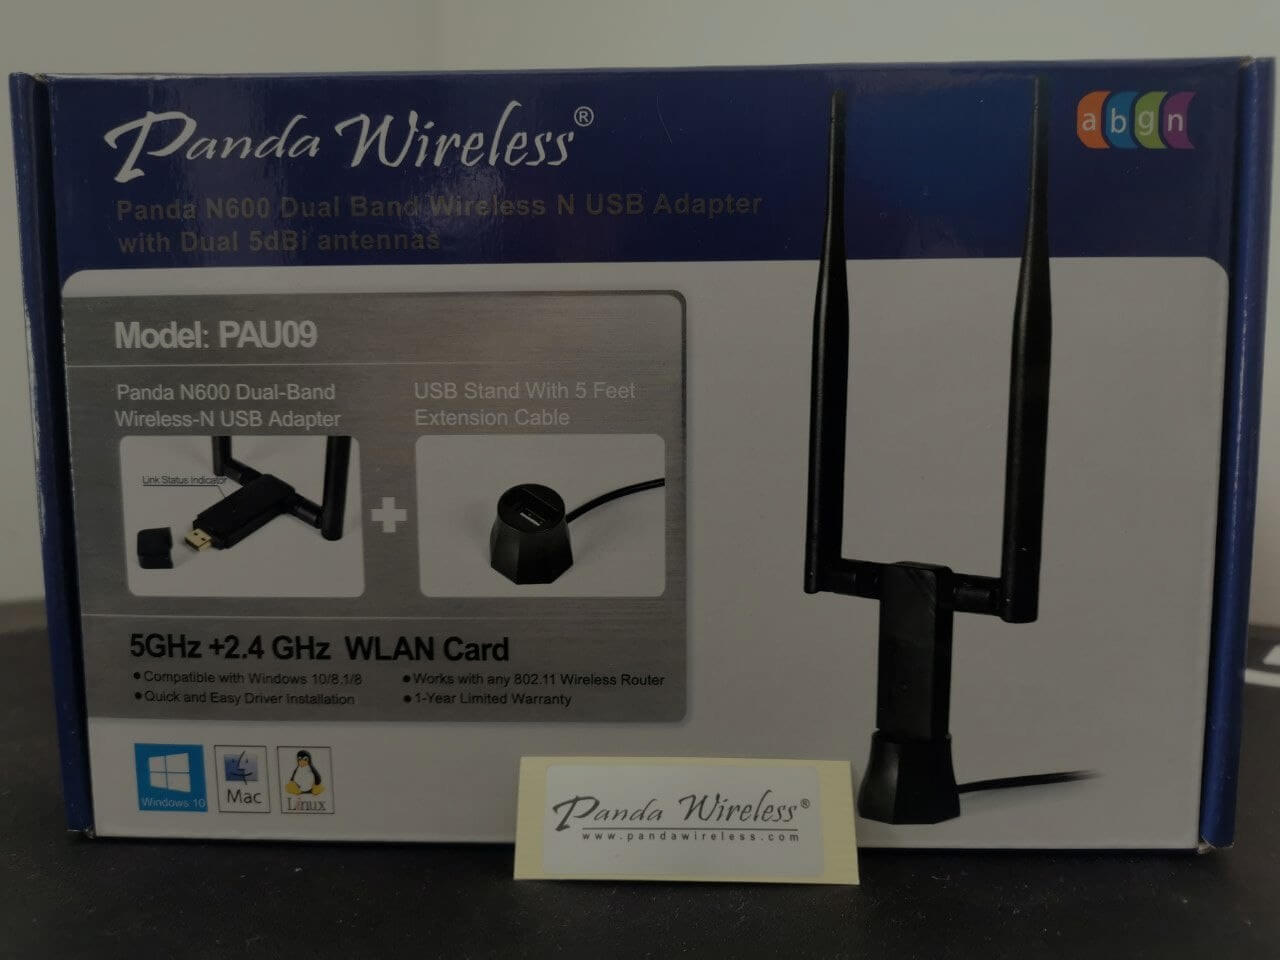  Caja Panda Wireless N600 [Fotografía propia]